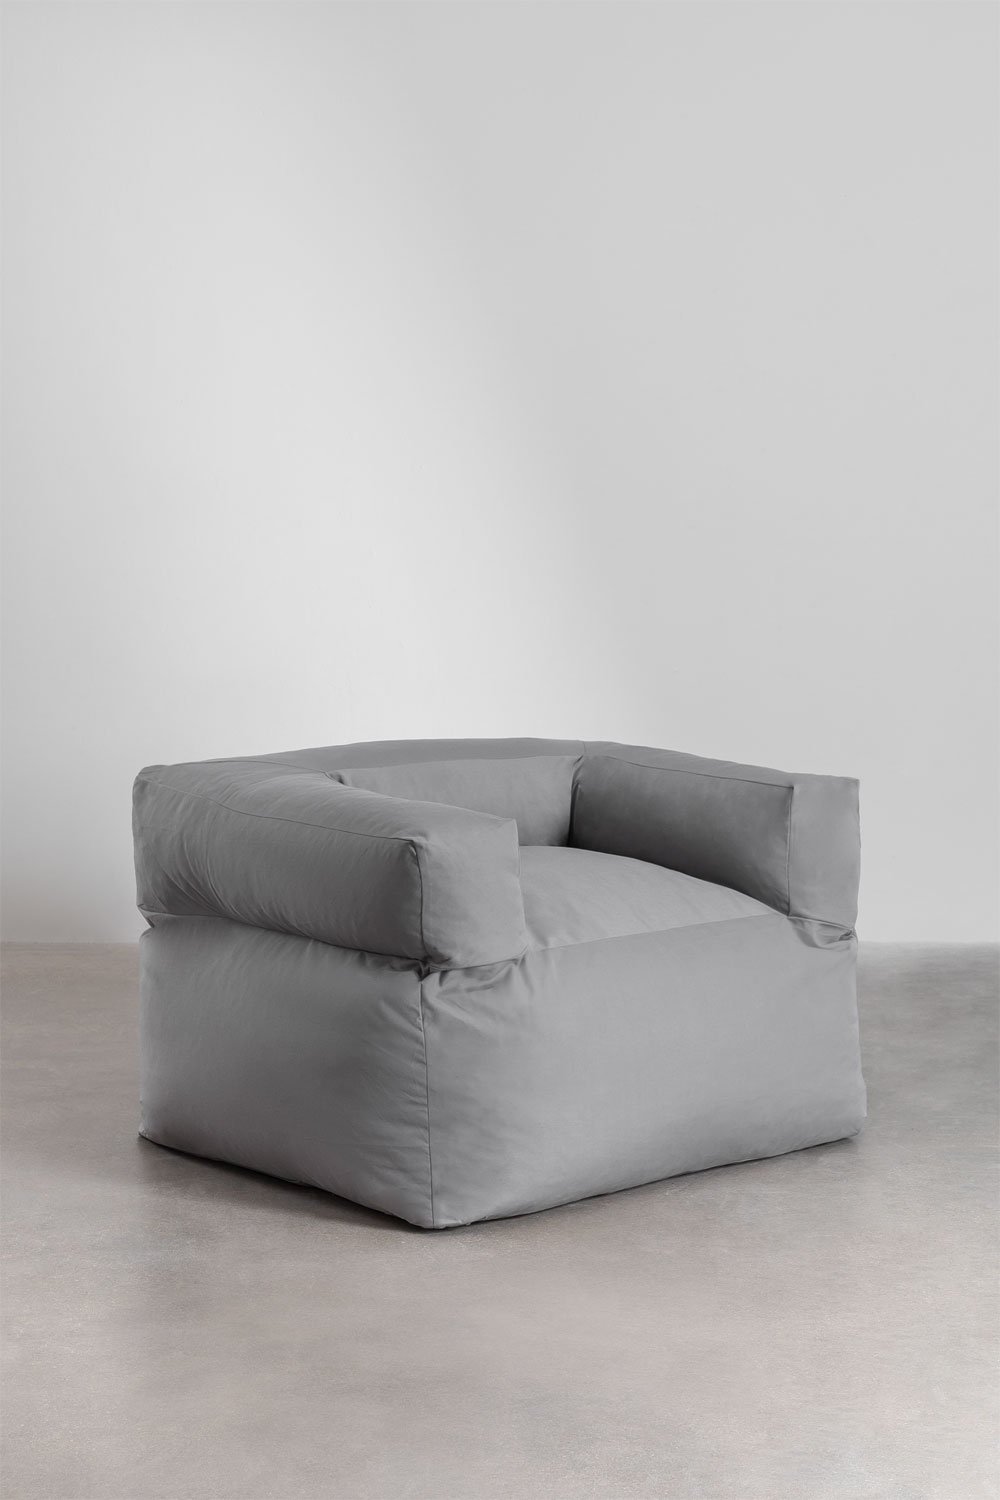 Darmian armchair, gallery image 1